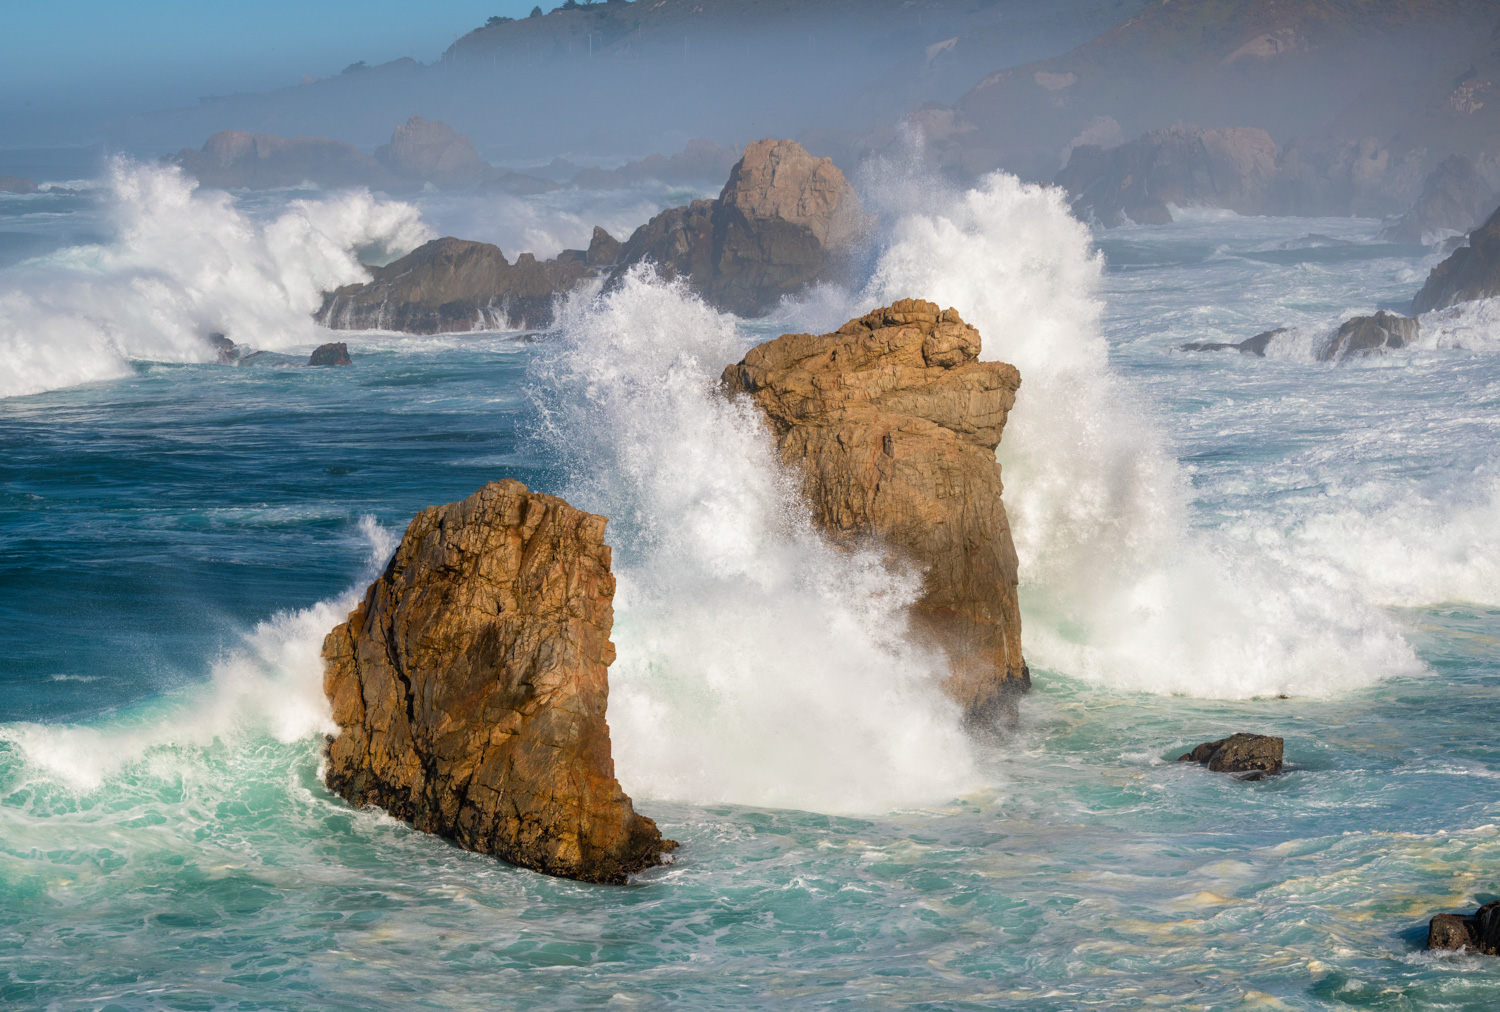 Crashing waves at Garrapata State Park on the California coast.